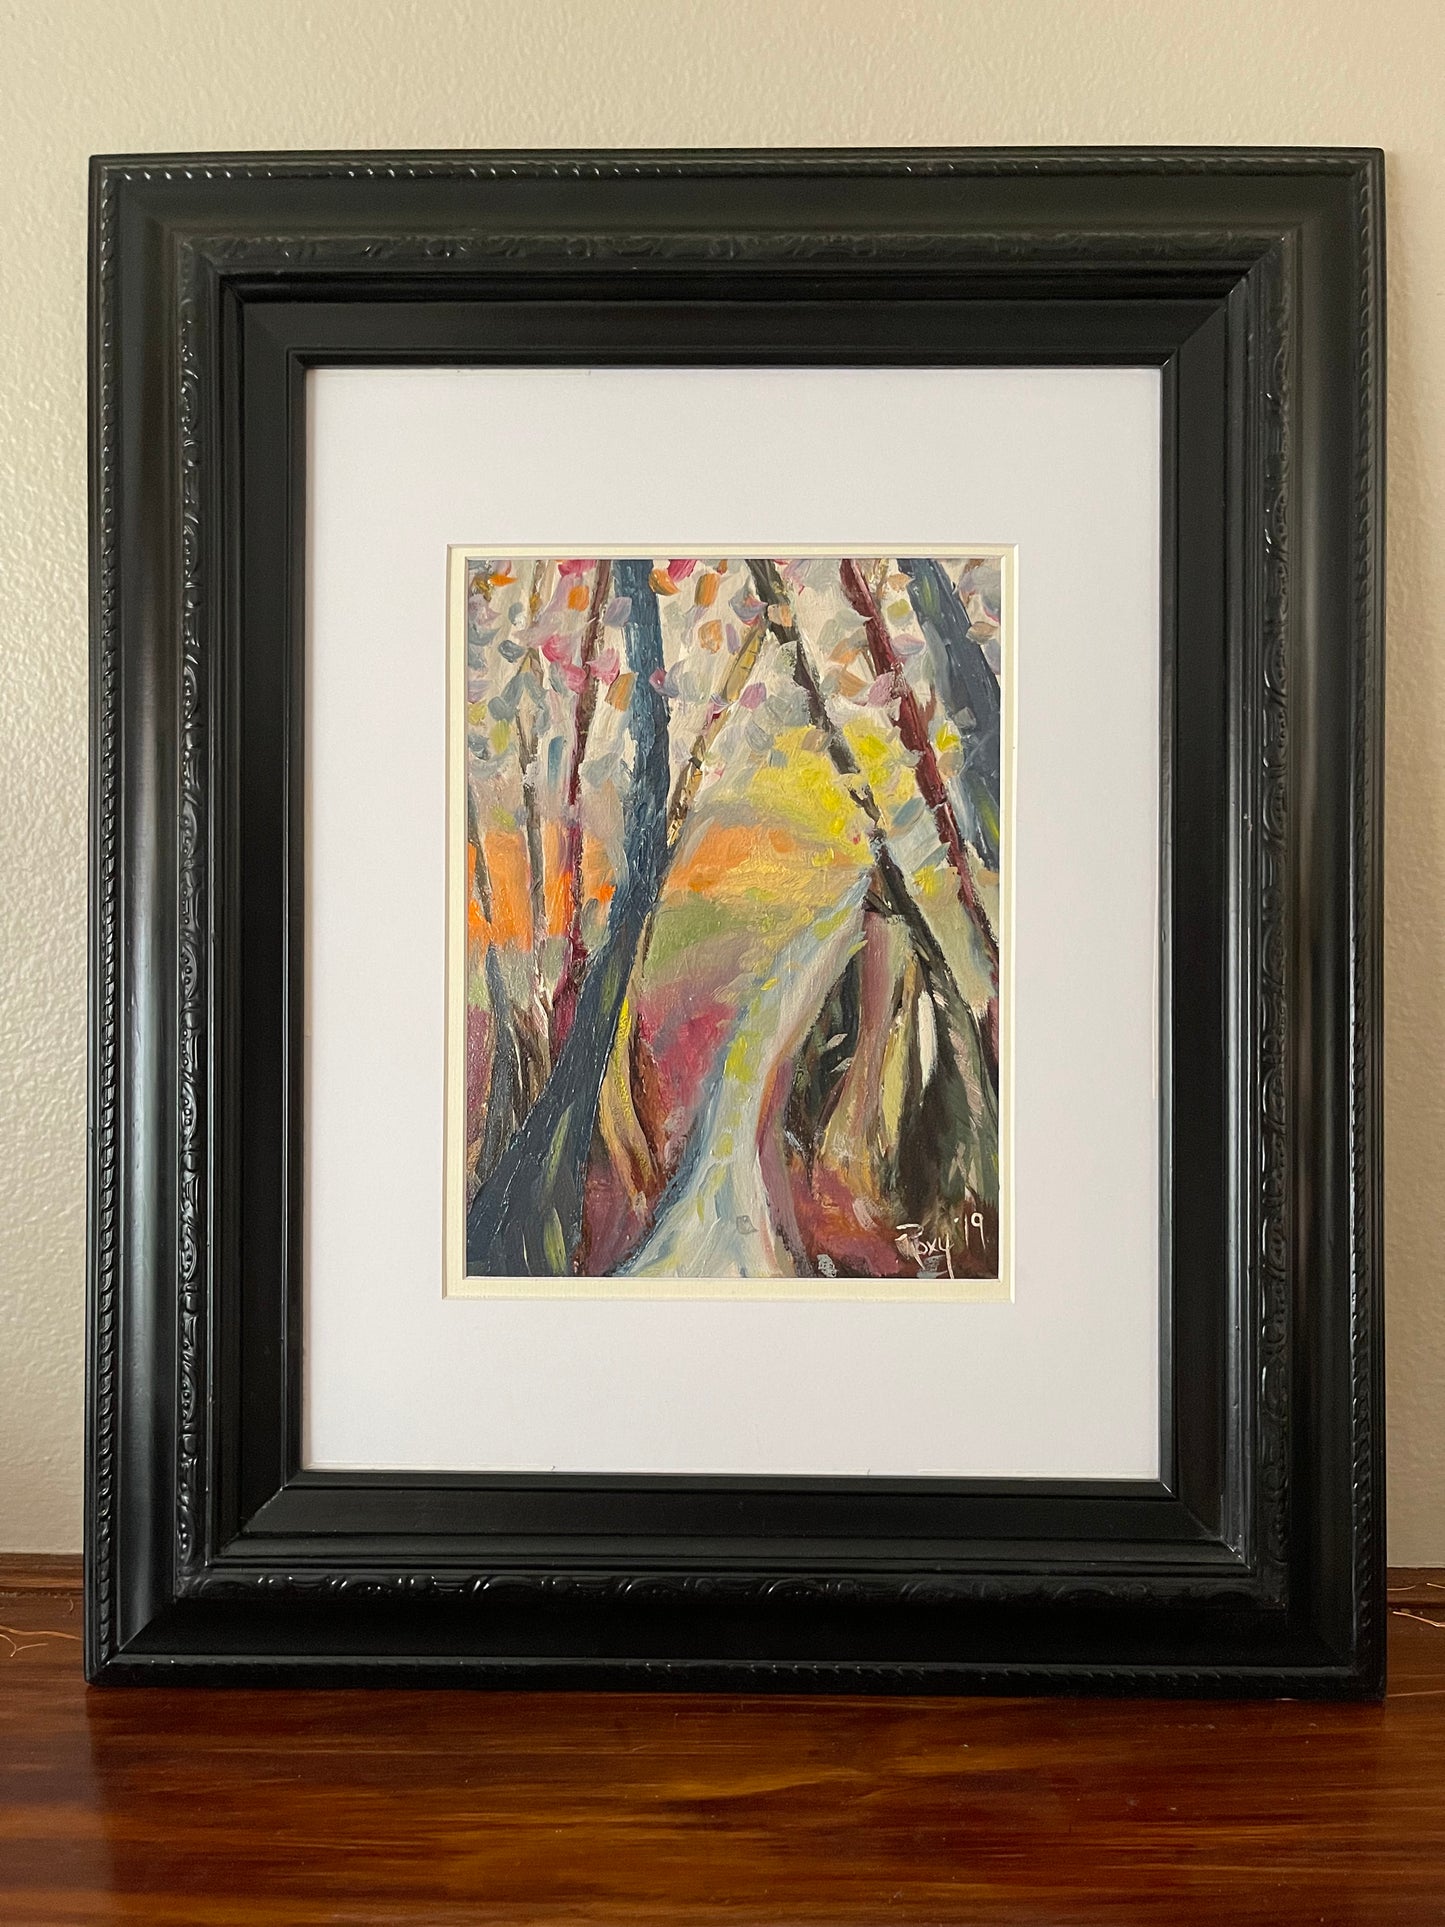 Autumn Lane Impression-Cotswolds Original Oil Landscape Painting Framed